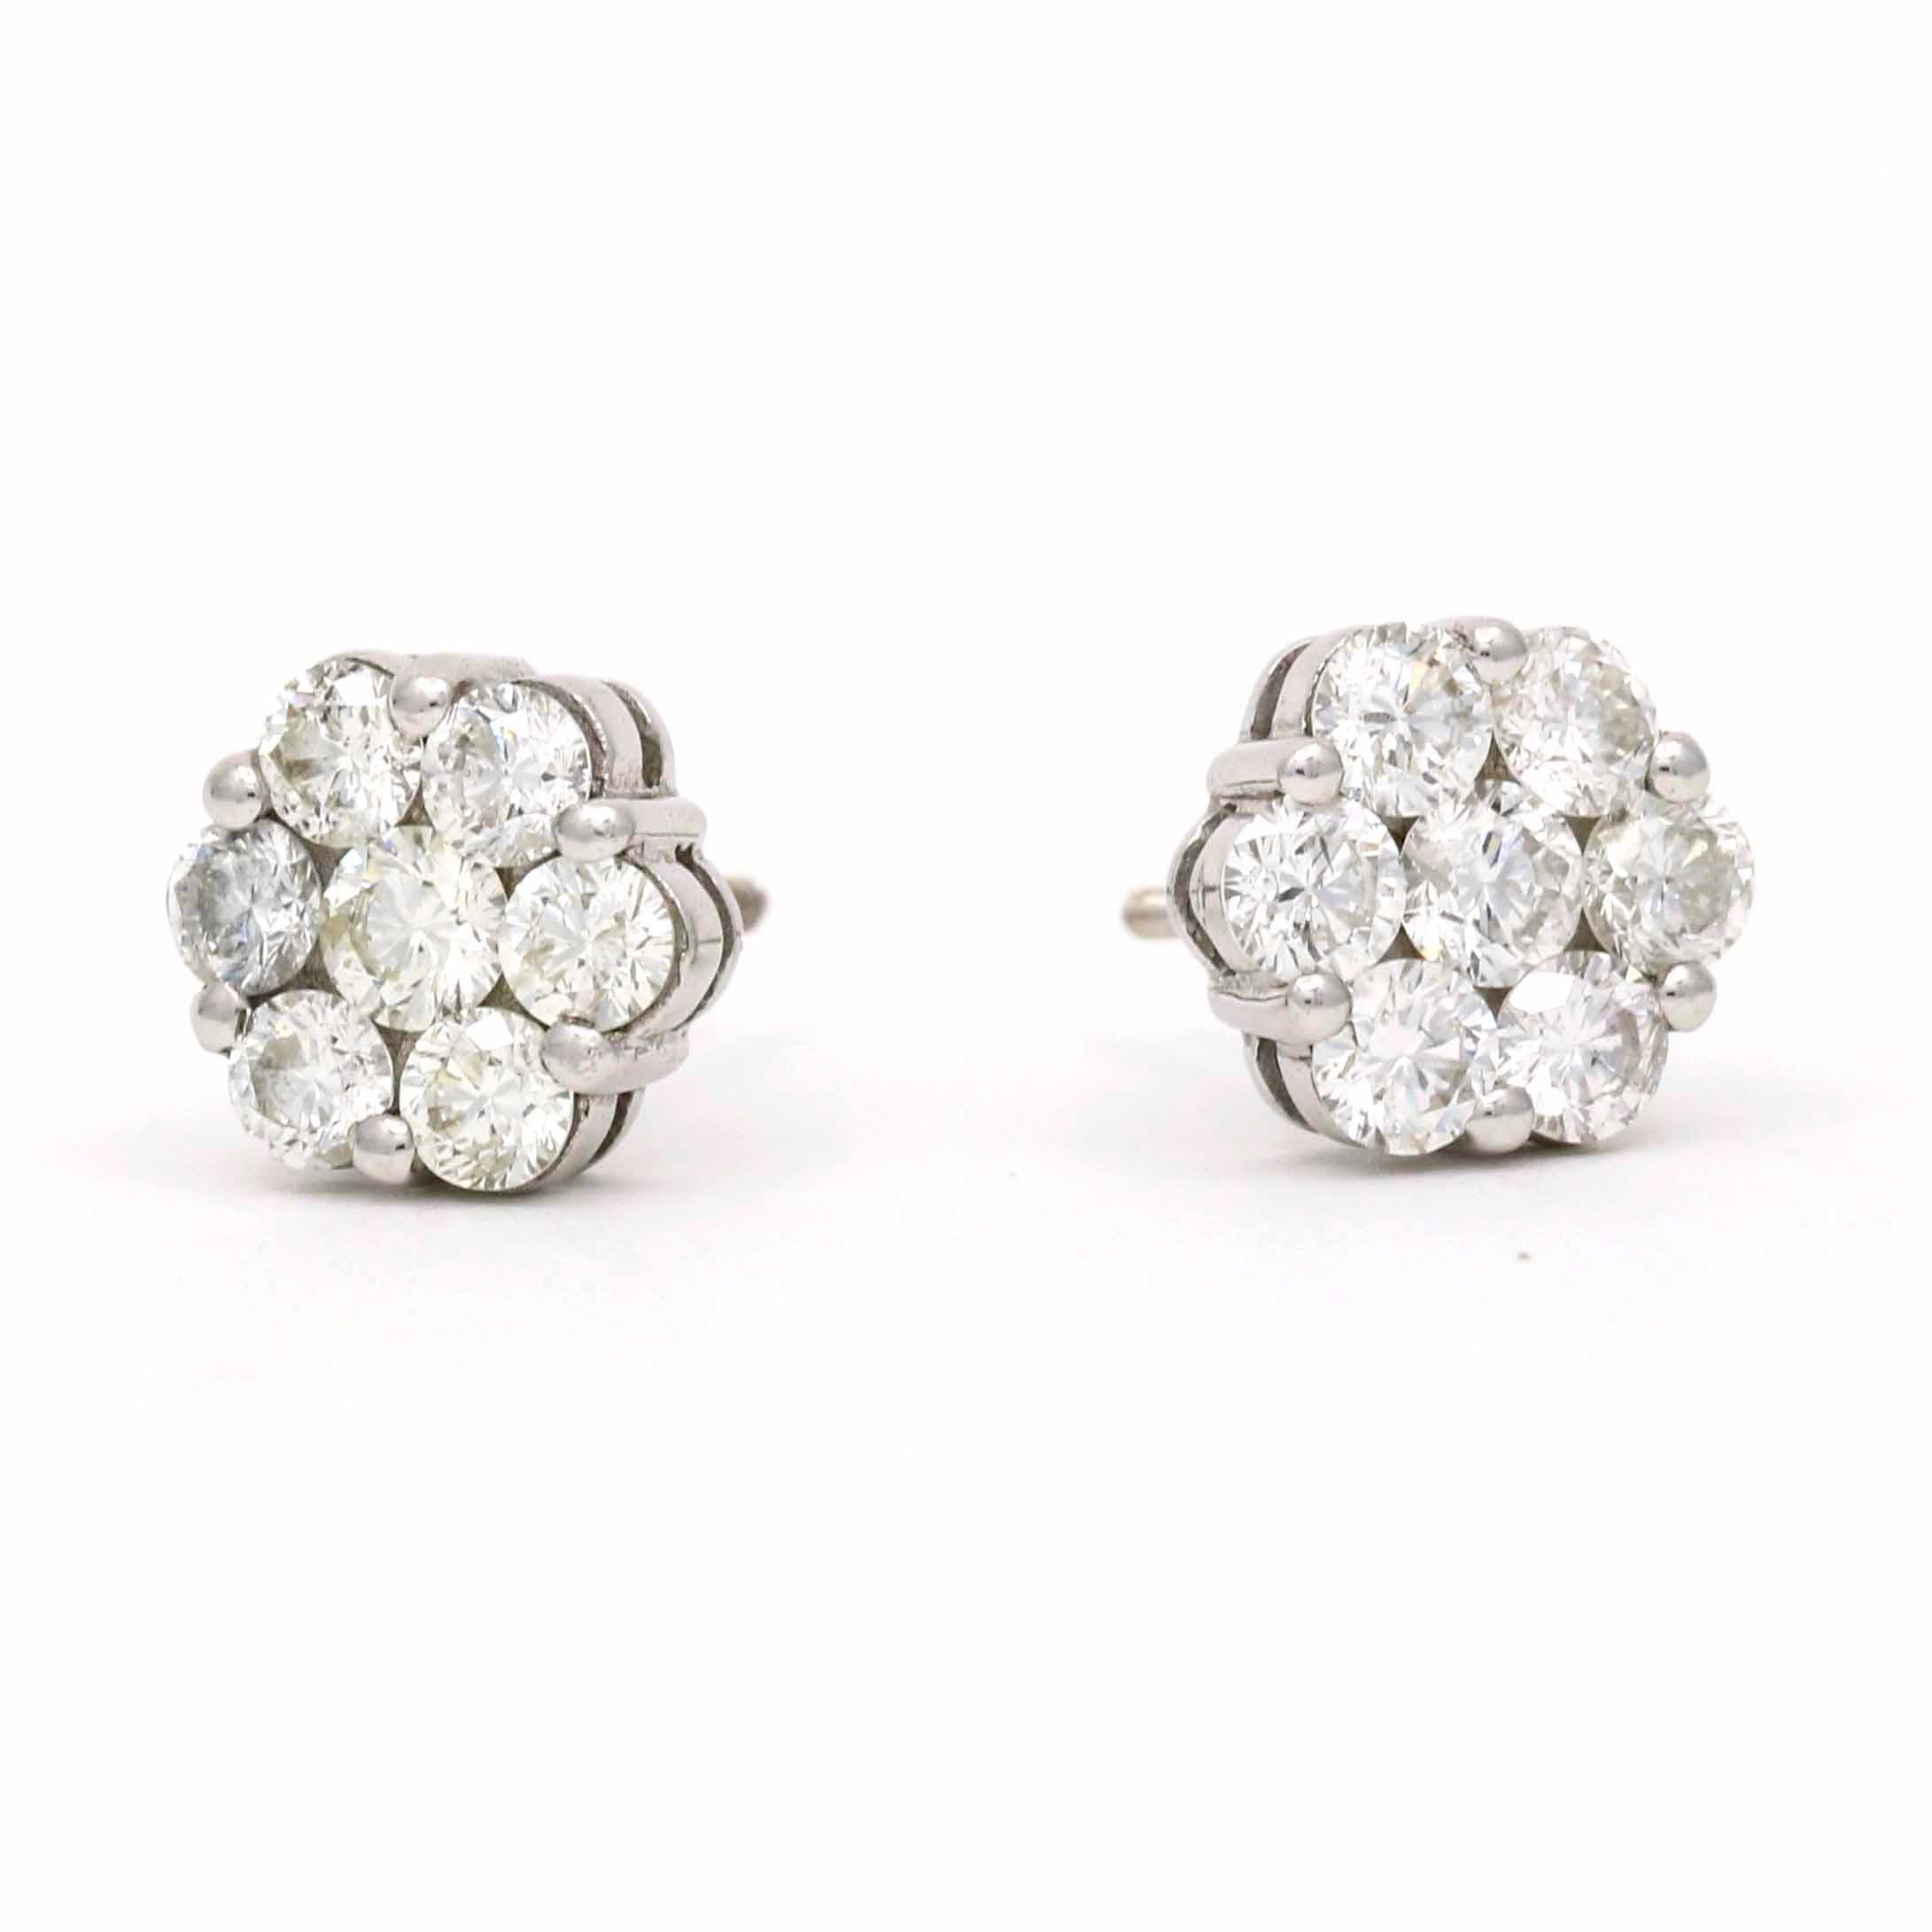 Contemporary Women's Diamond Cluster Earrings in 18k White Gold 2.00 Cttw